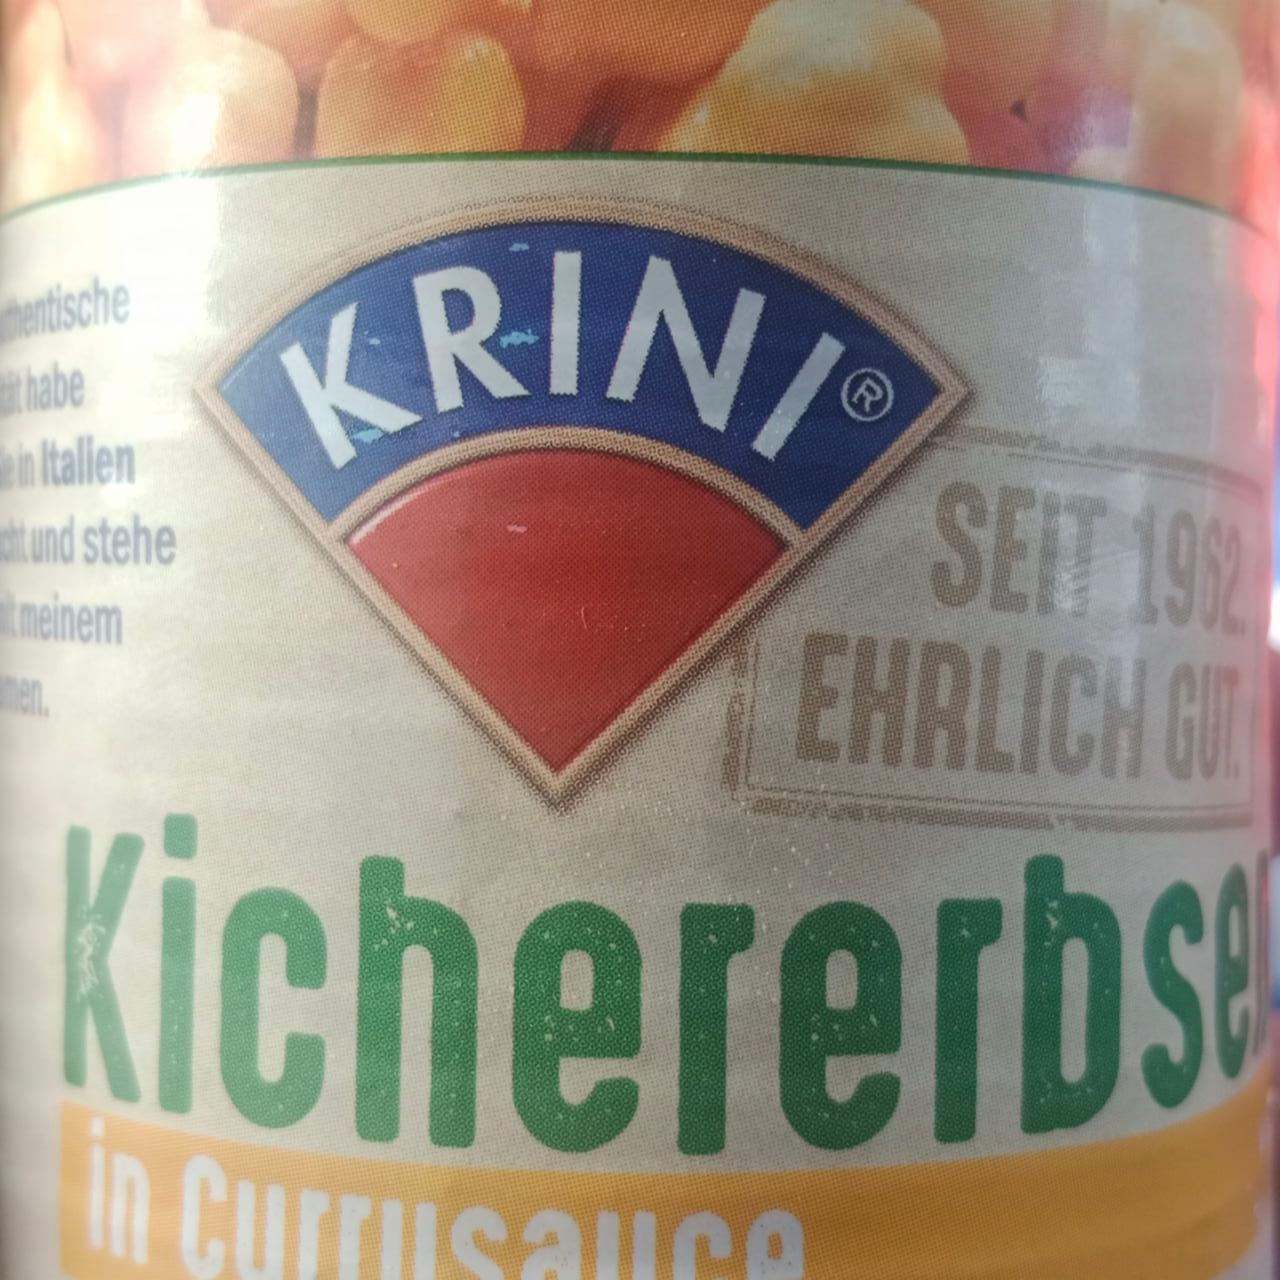 Fotografie - Kichereebsen in currysauce